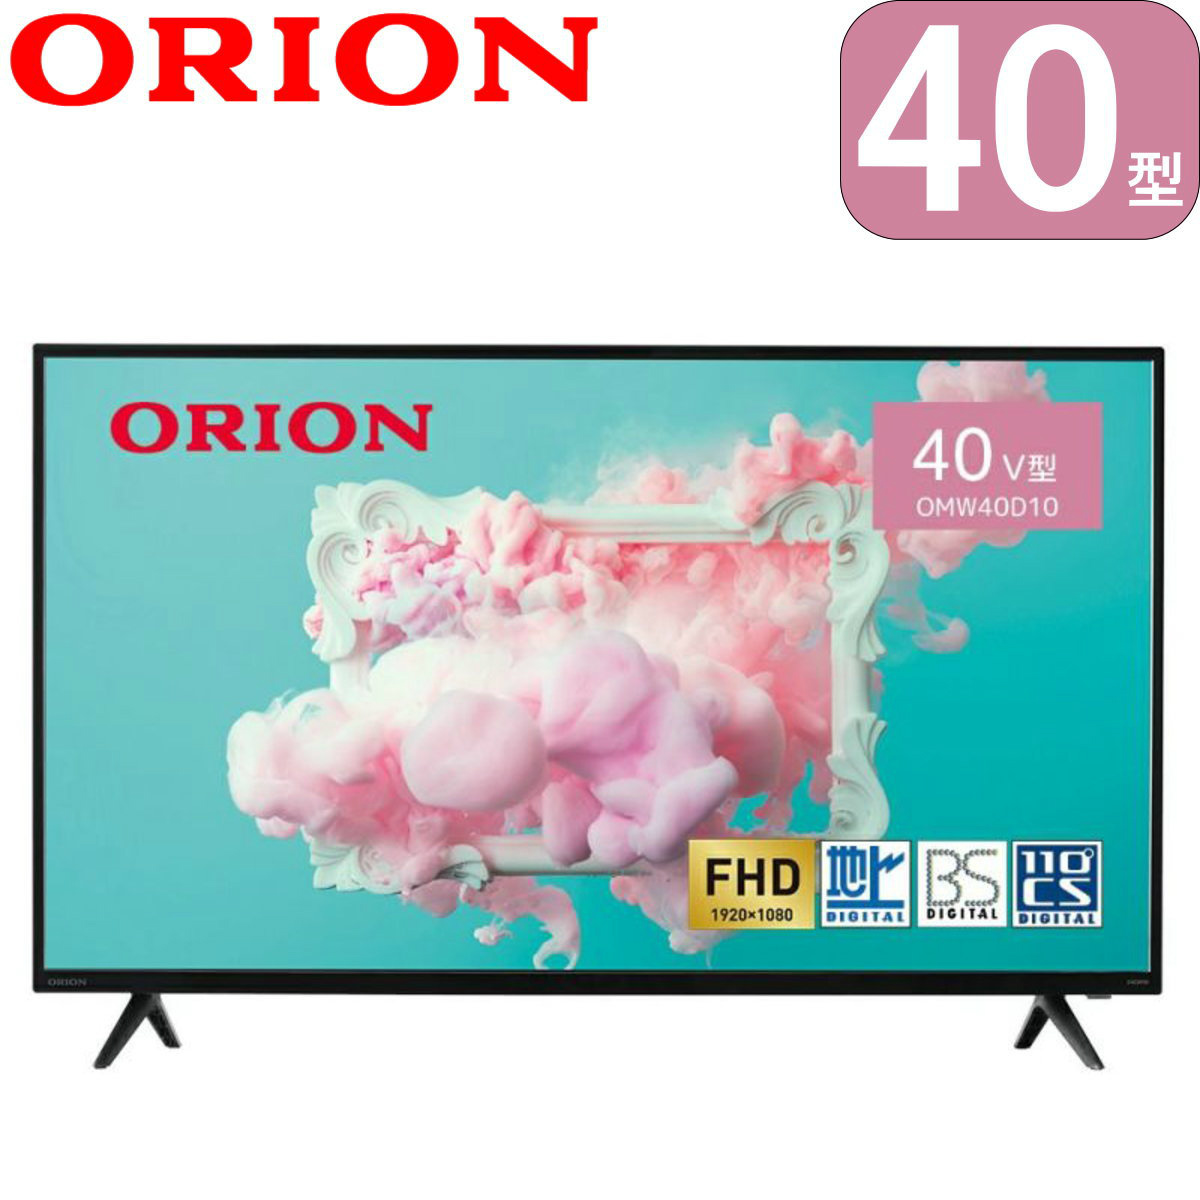 ORION 40v型 フルハイビジョン液晶テレビ OMW40D10 | USB 